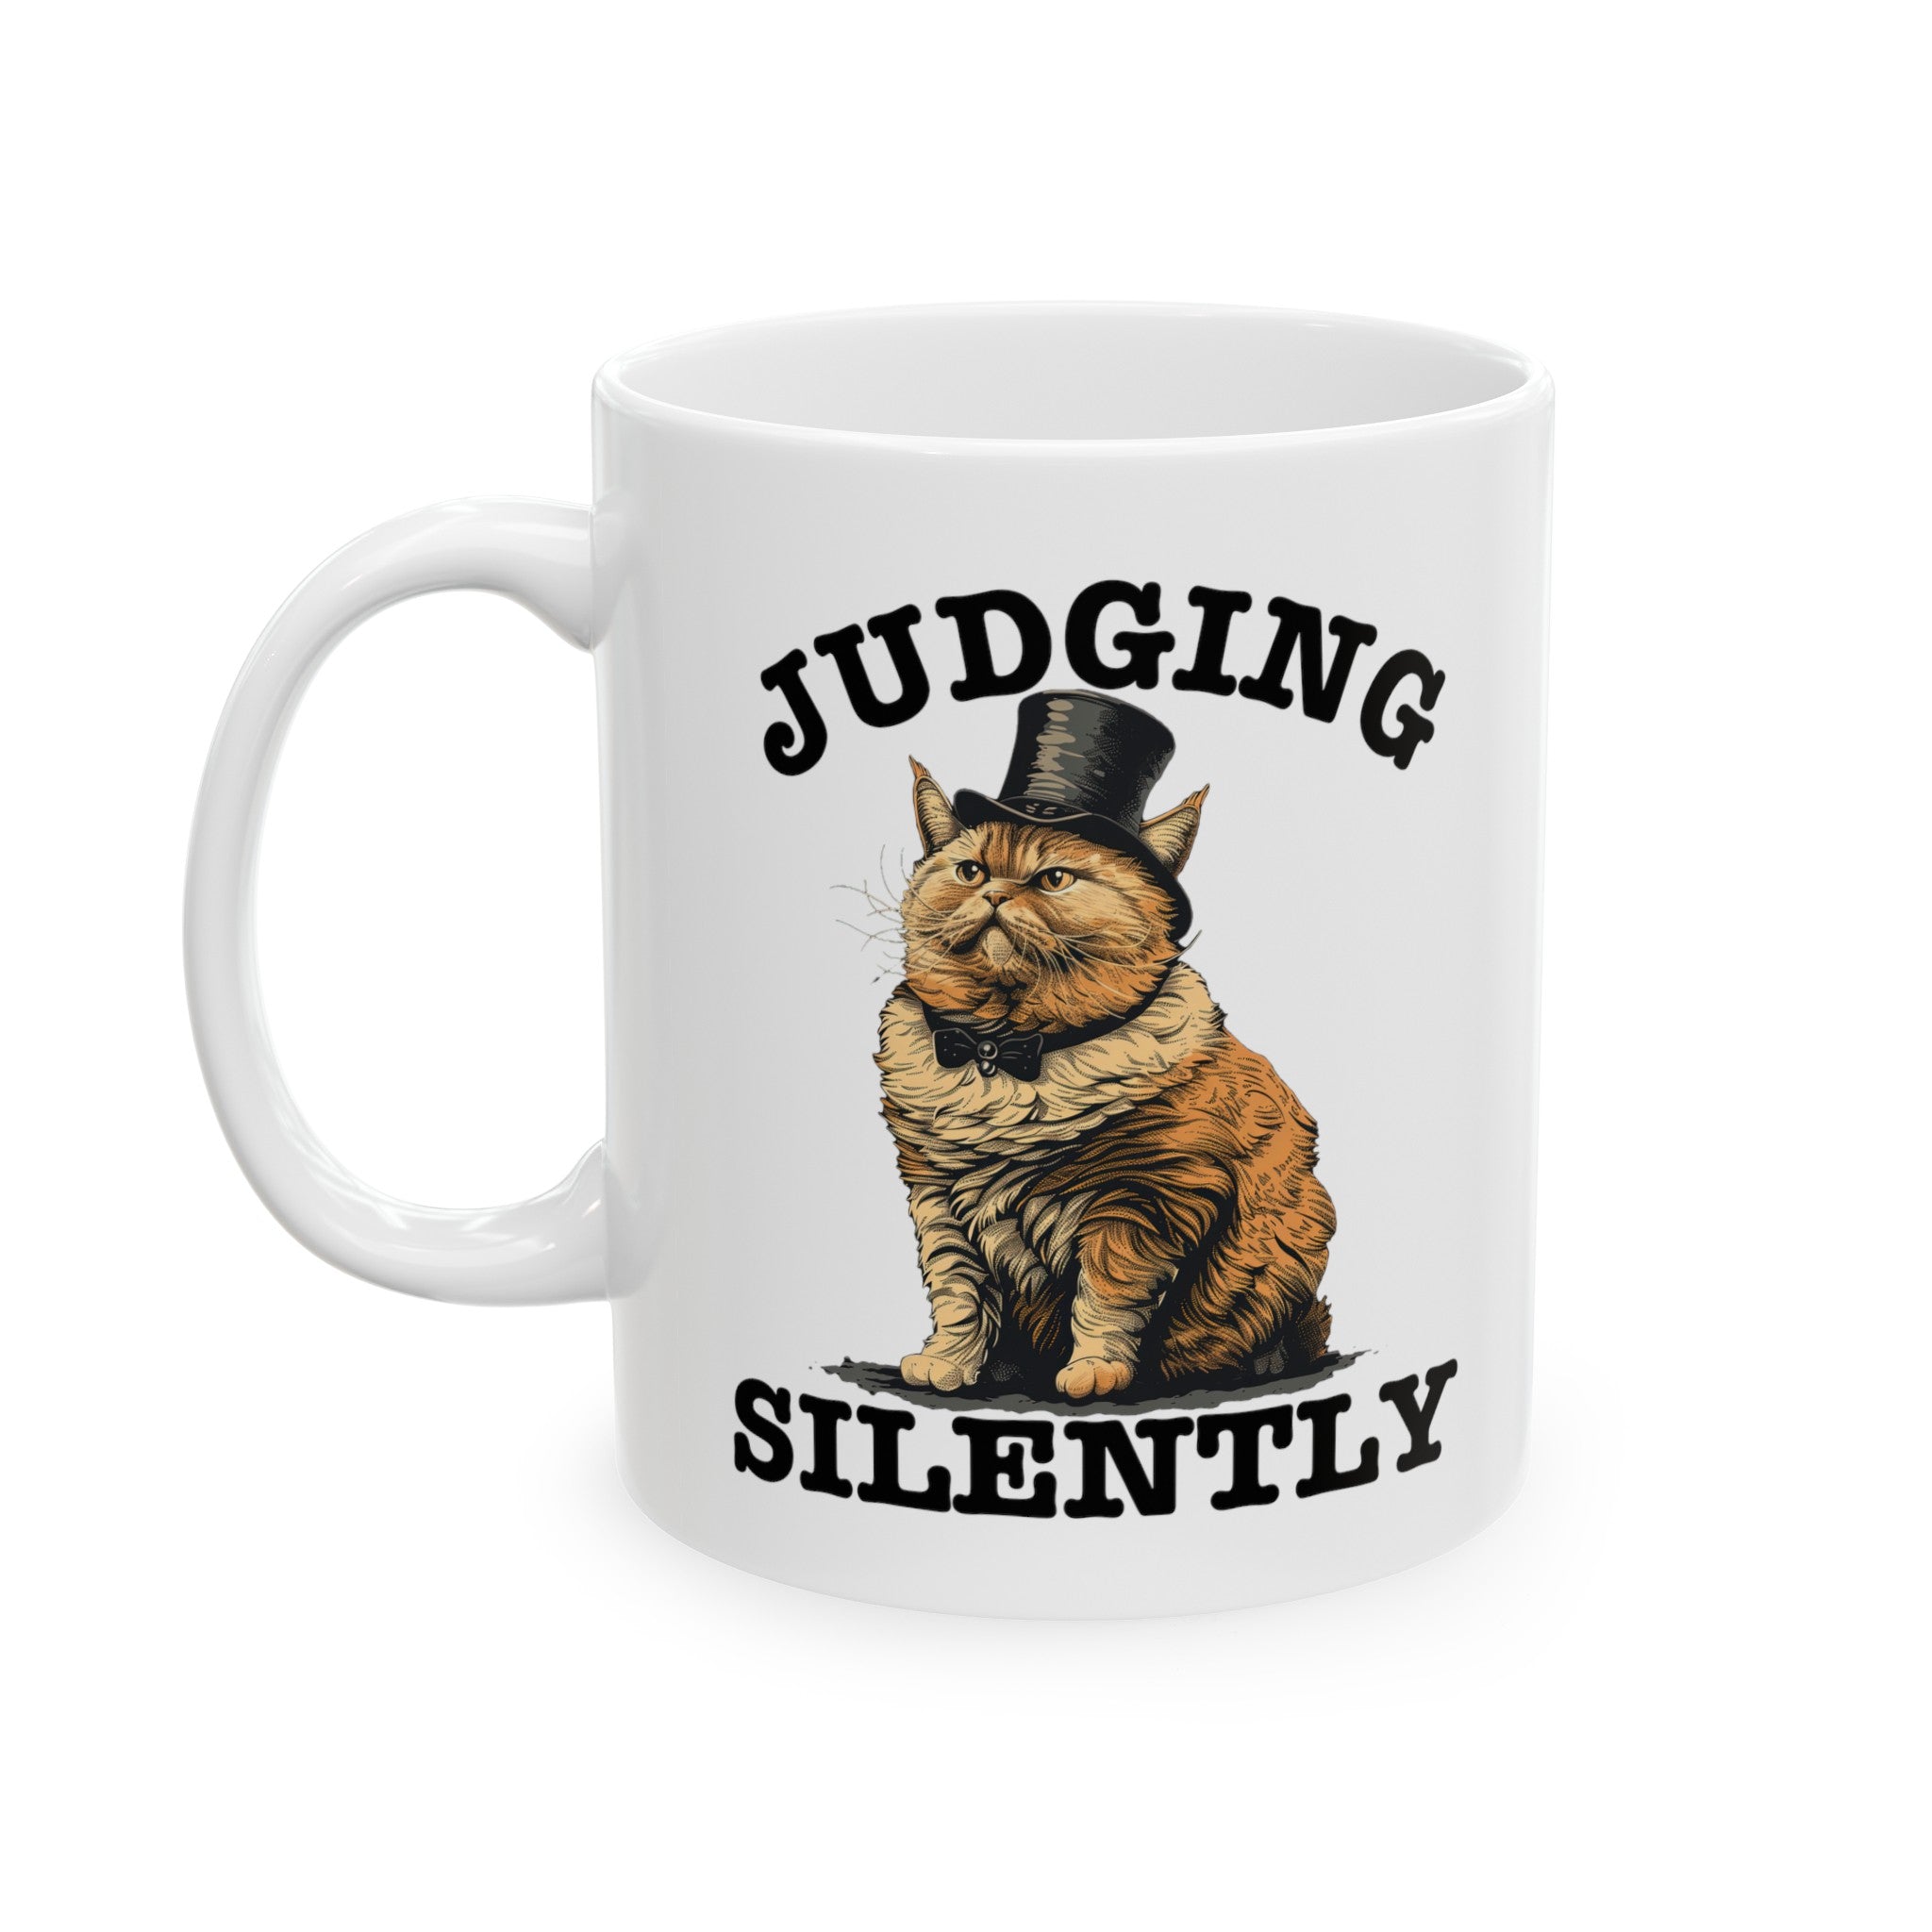 Judging Silently Cat Mug